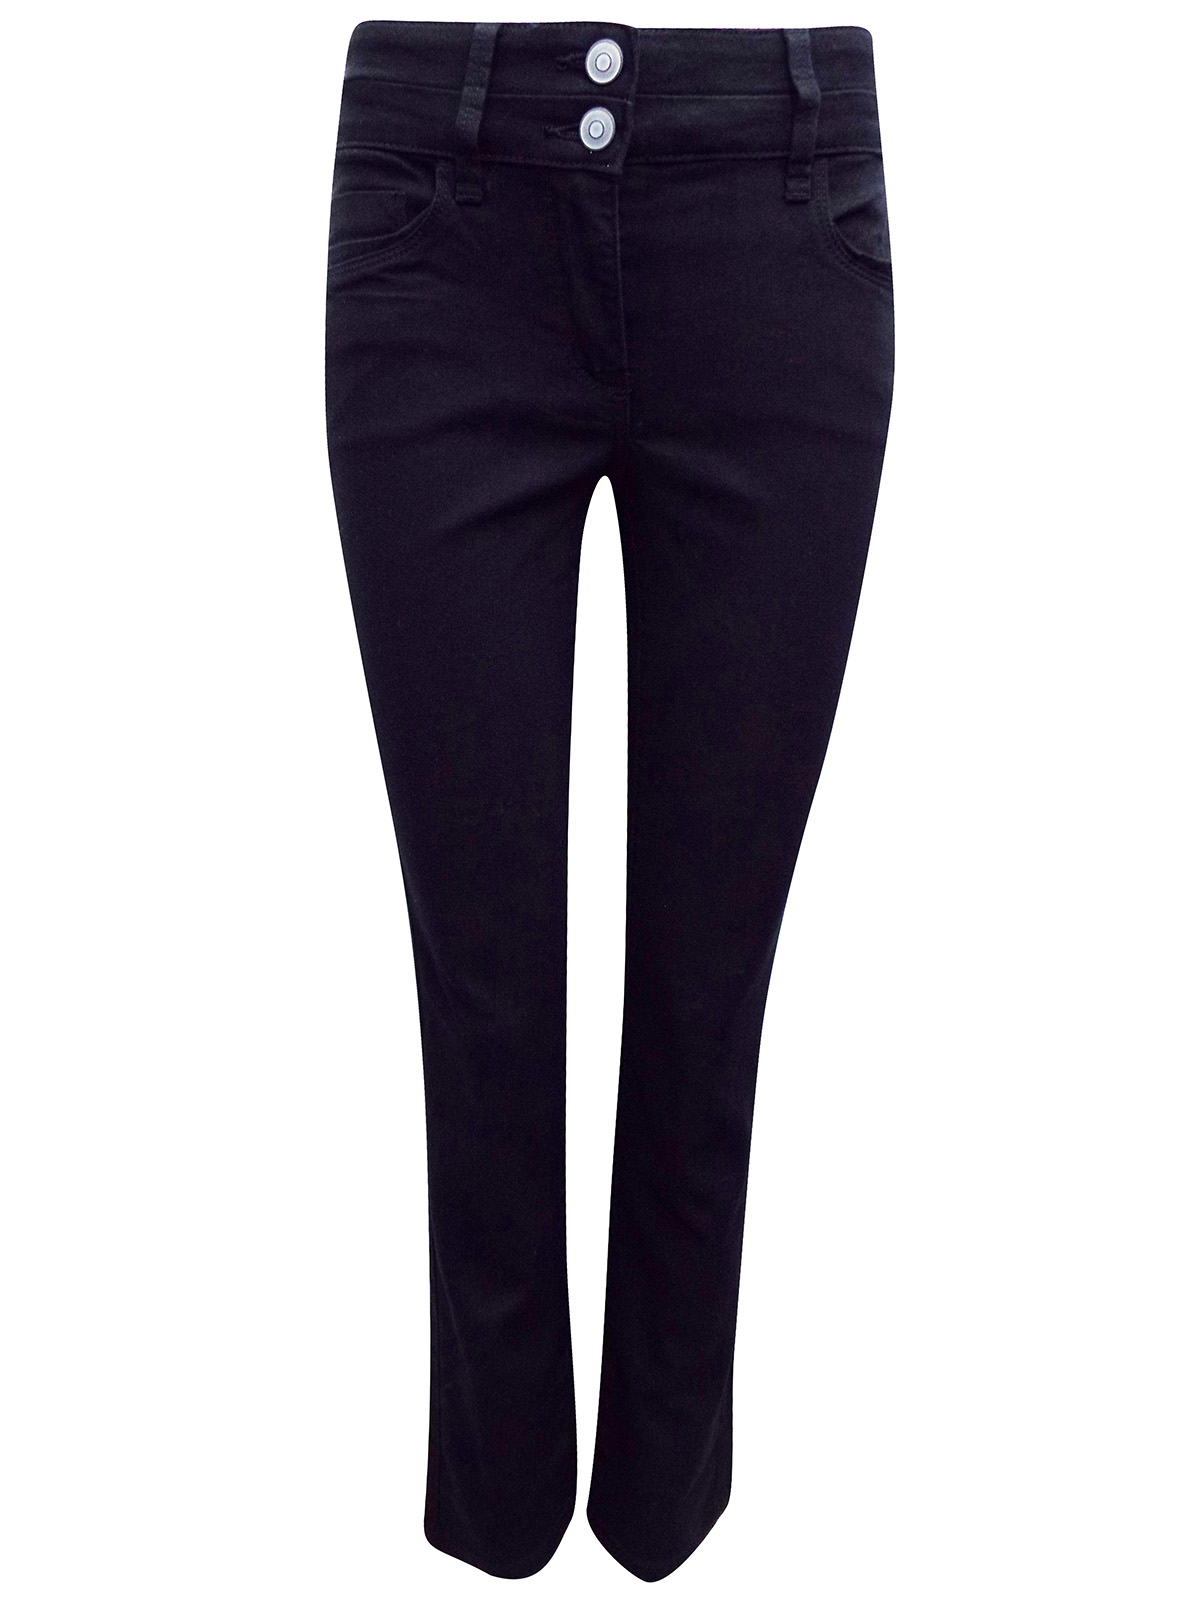 N3xt BLACK Lift Slim and Shape Slim Leg Jeans - Size 8 to 24 (Leg 29-31 ...